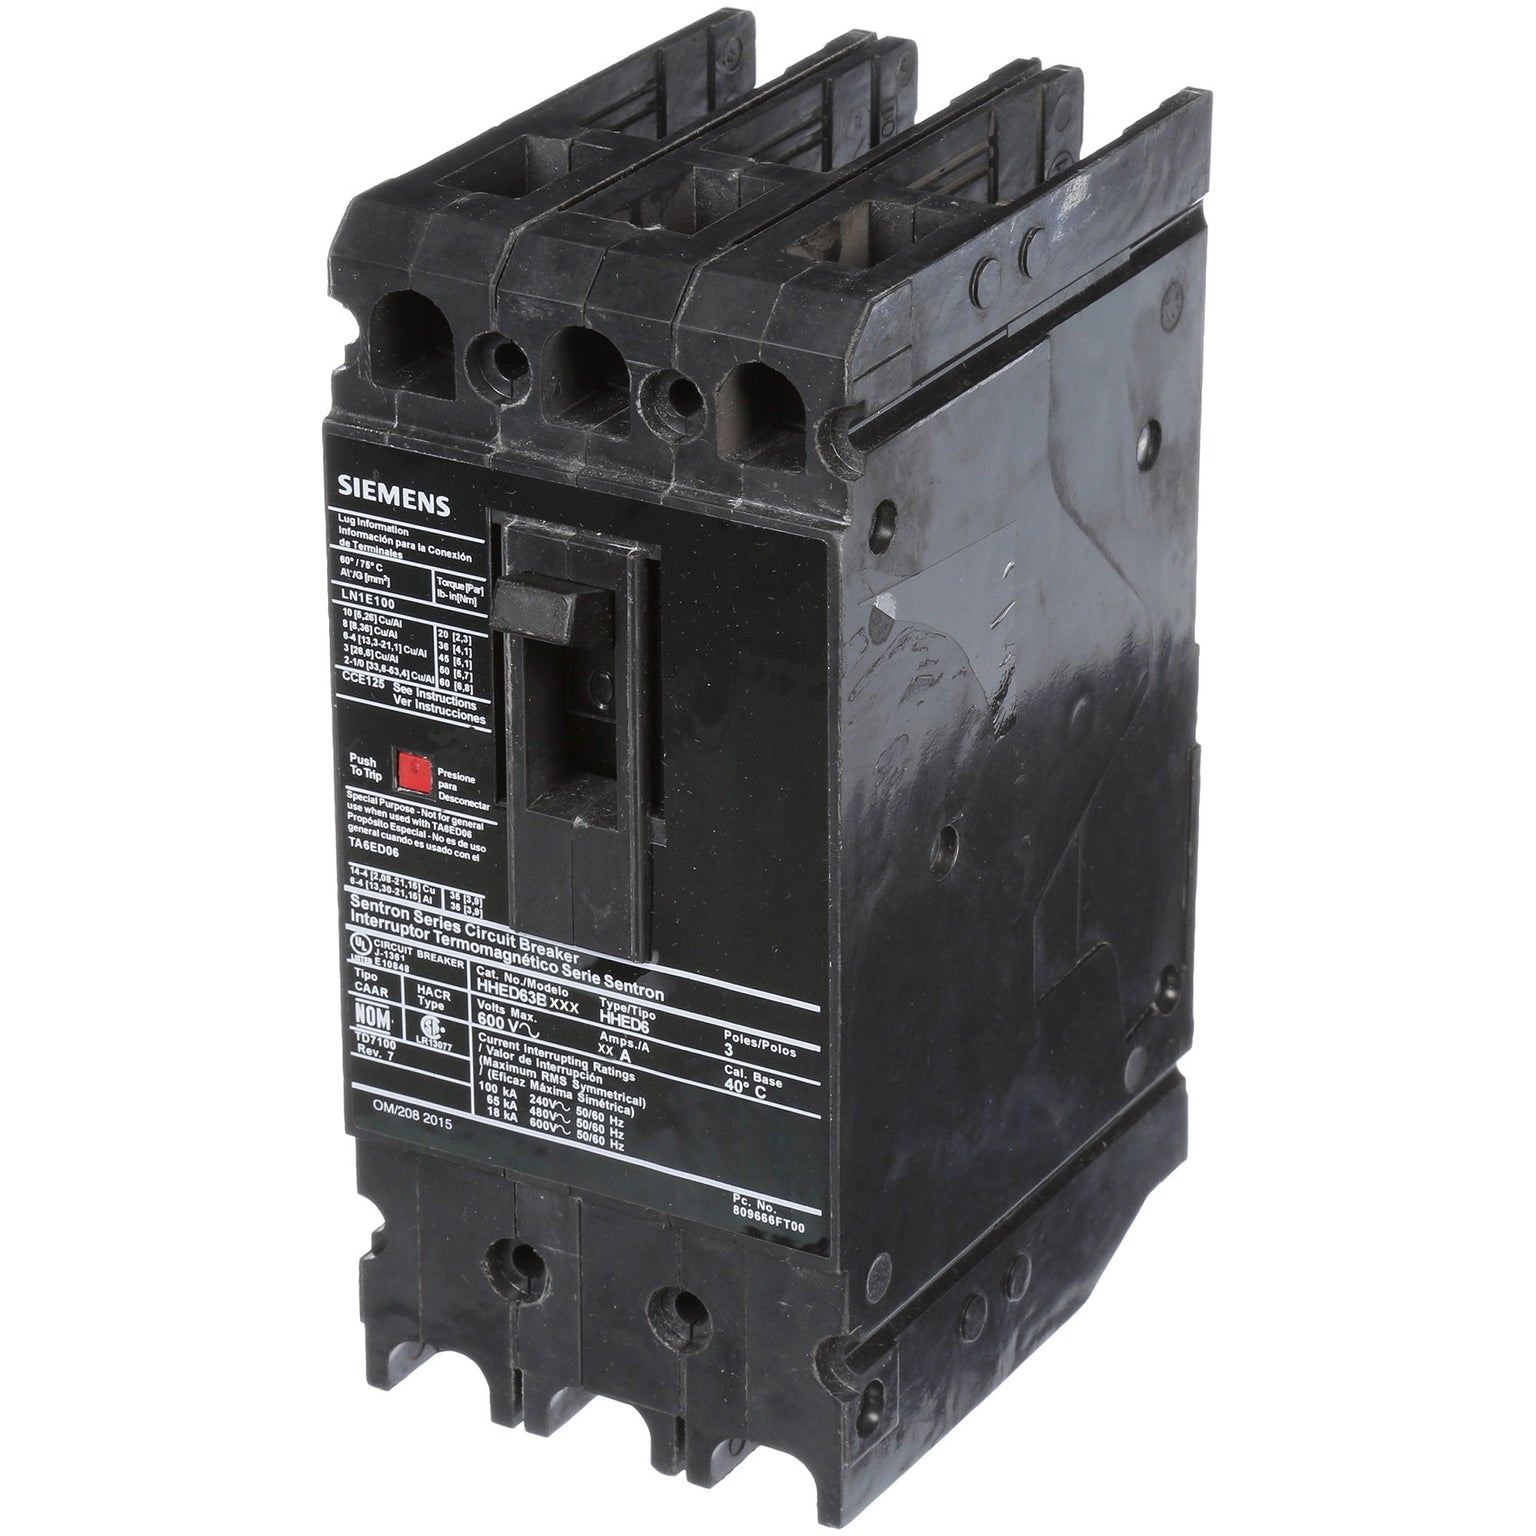 HHED63B020L - Siemens - Molded Case Circuit Breaker